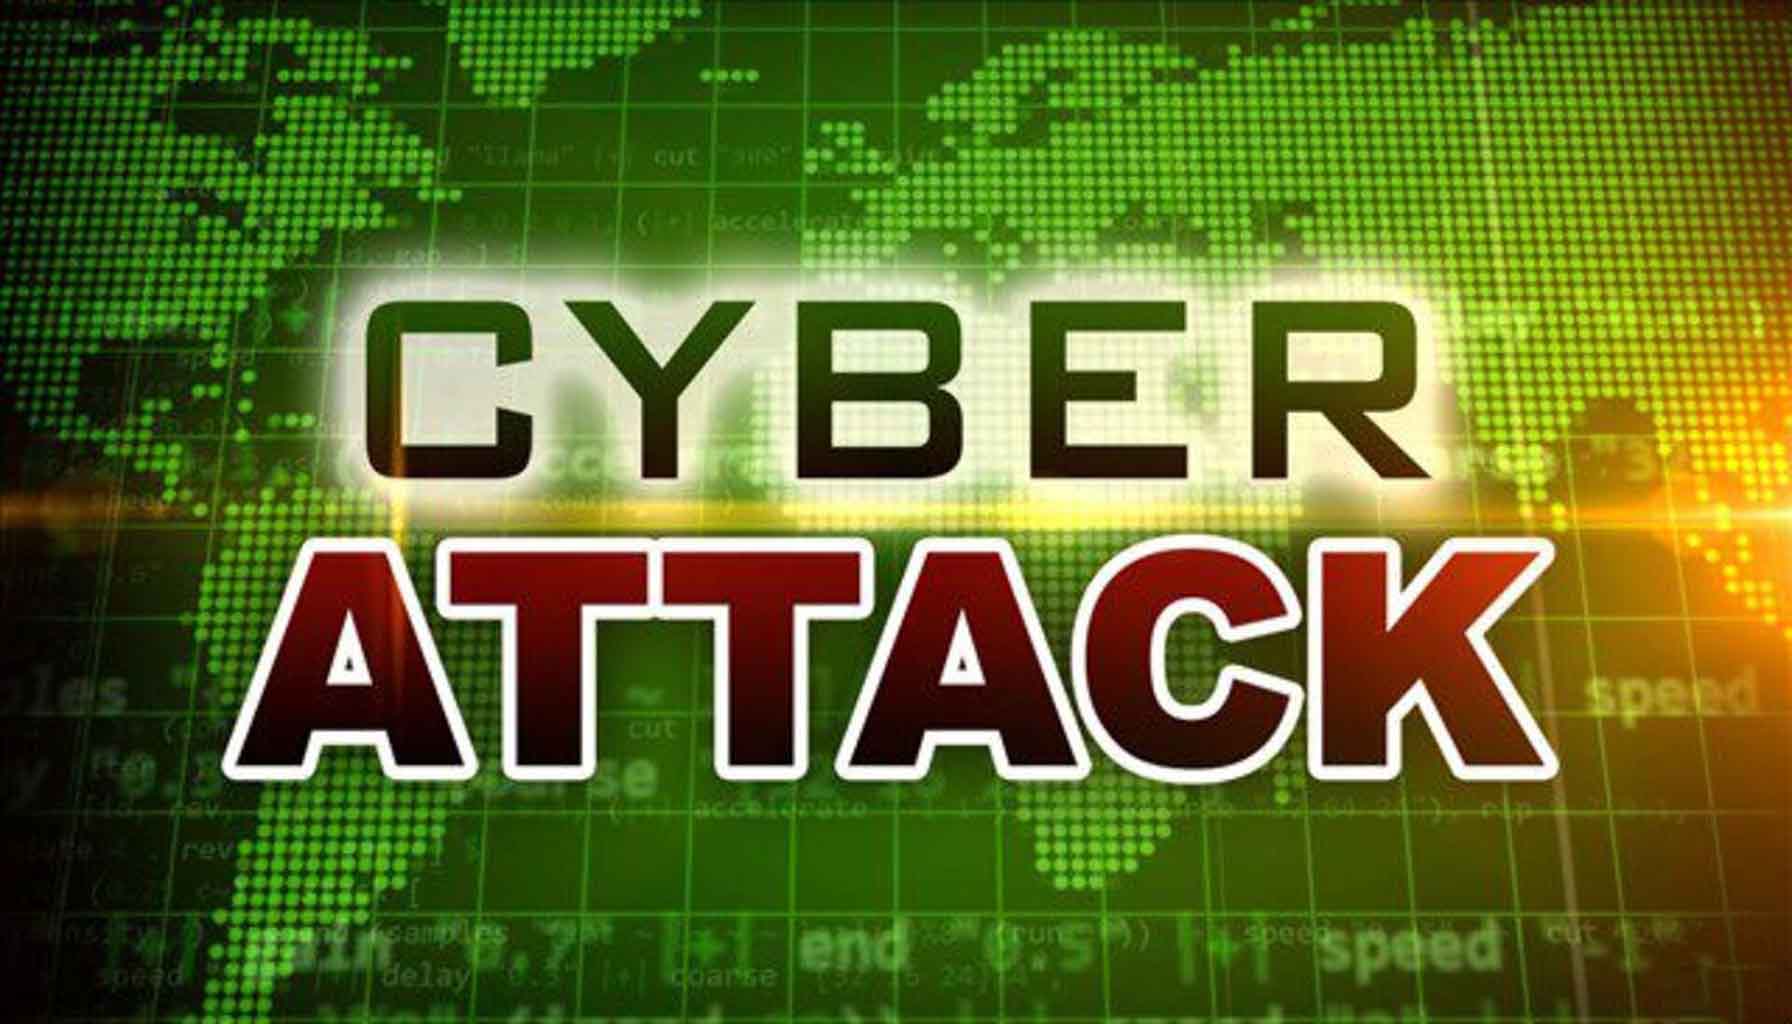 Cyberattack news graphic